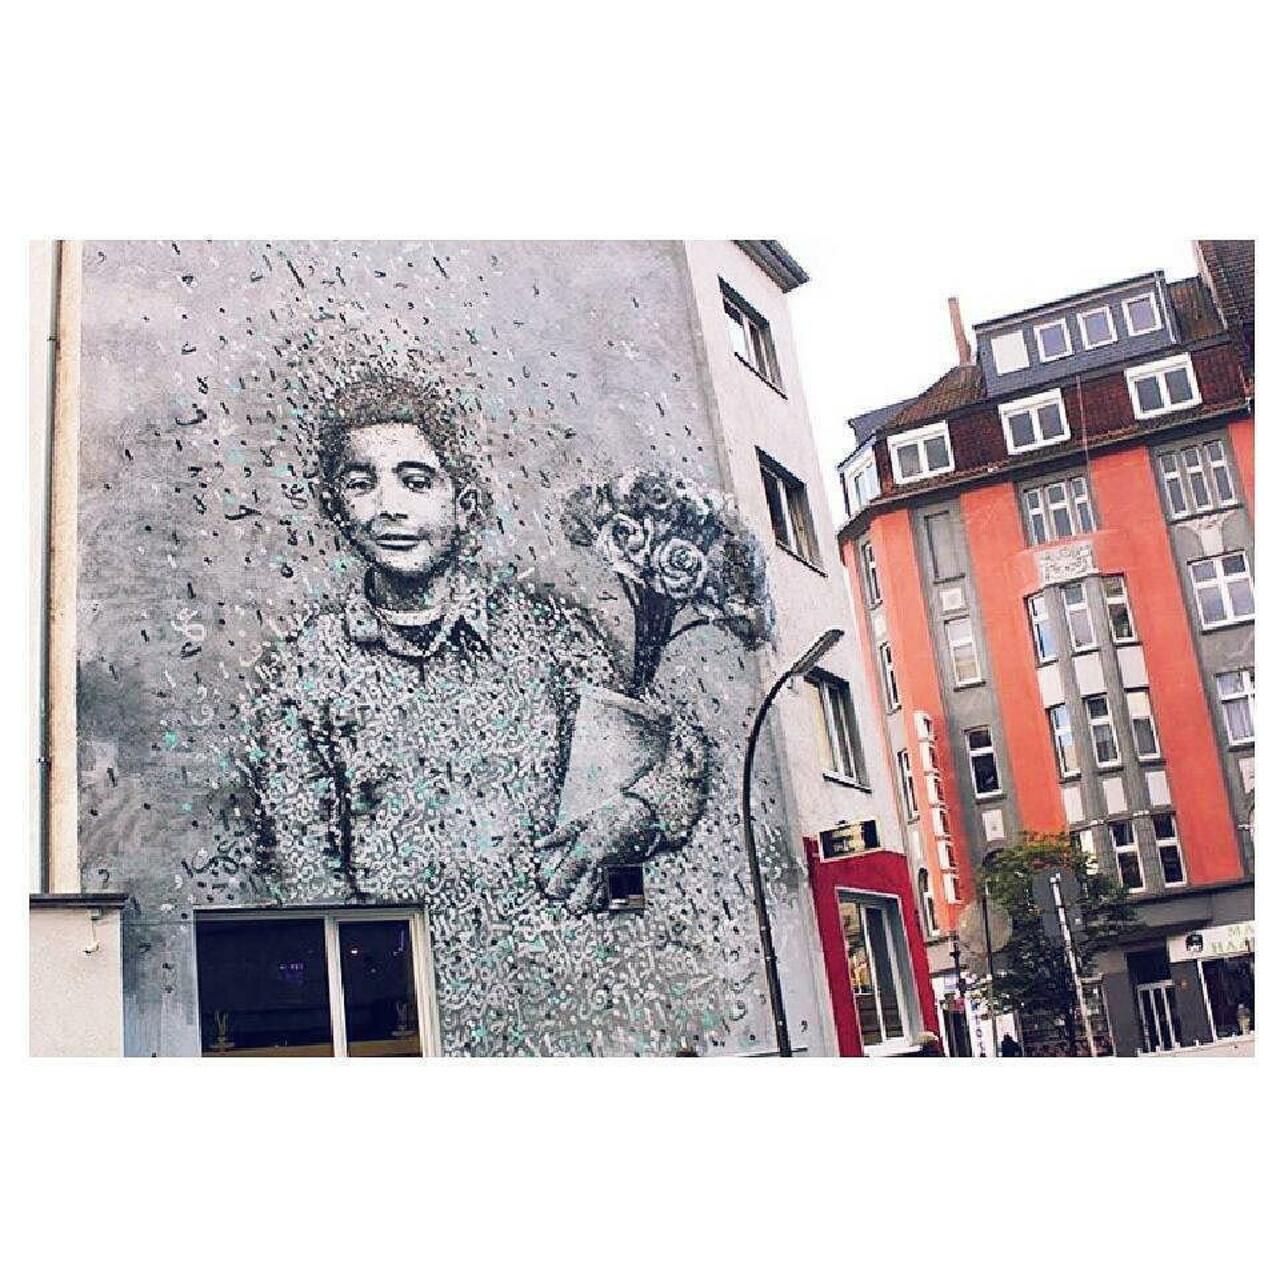 RT @artpushr: via #hsinjaber "http://ift.tt/1KHlyse" #graffiti #streetart http://t.co/7j46FQEdm7